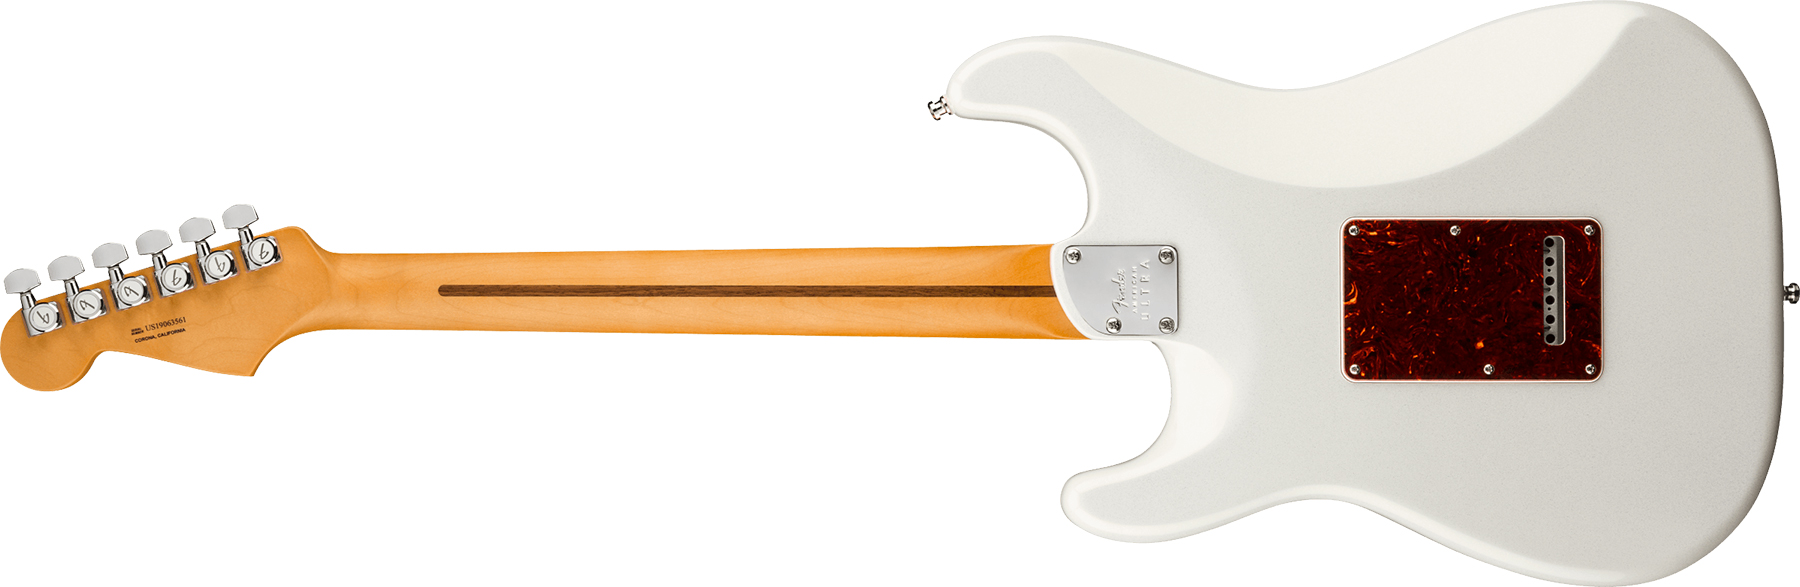 Fender Strat American Ultra Hss 2019 Usa Mn - Arctic Pearl - Str shape electric guitar - Variation 1